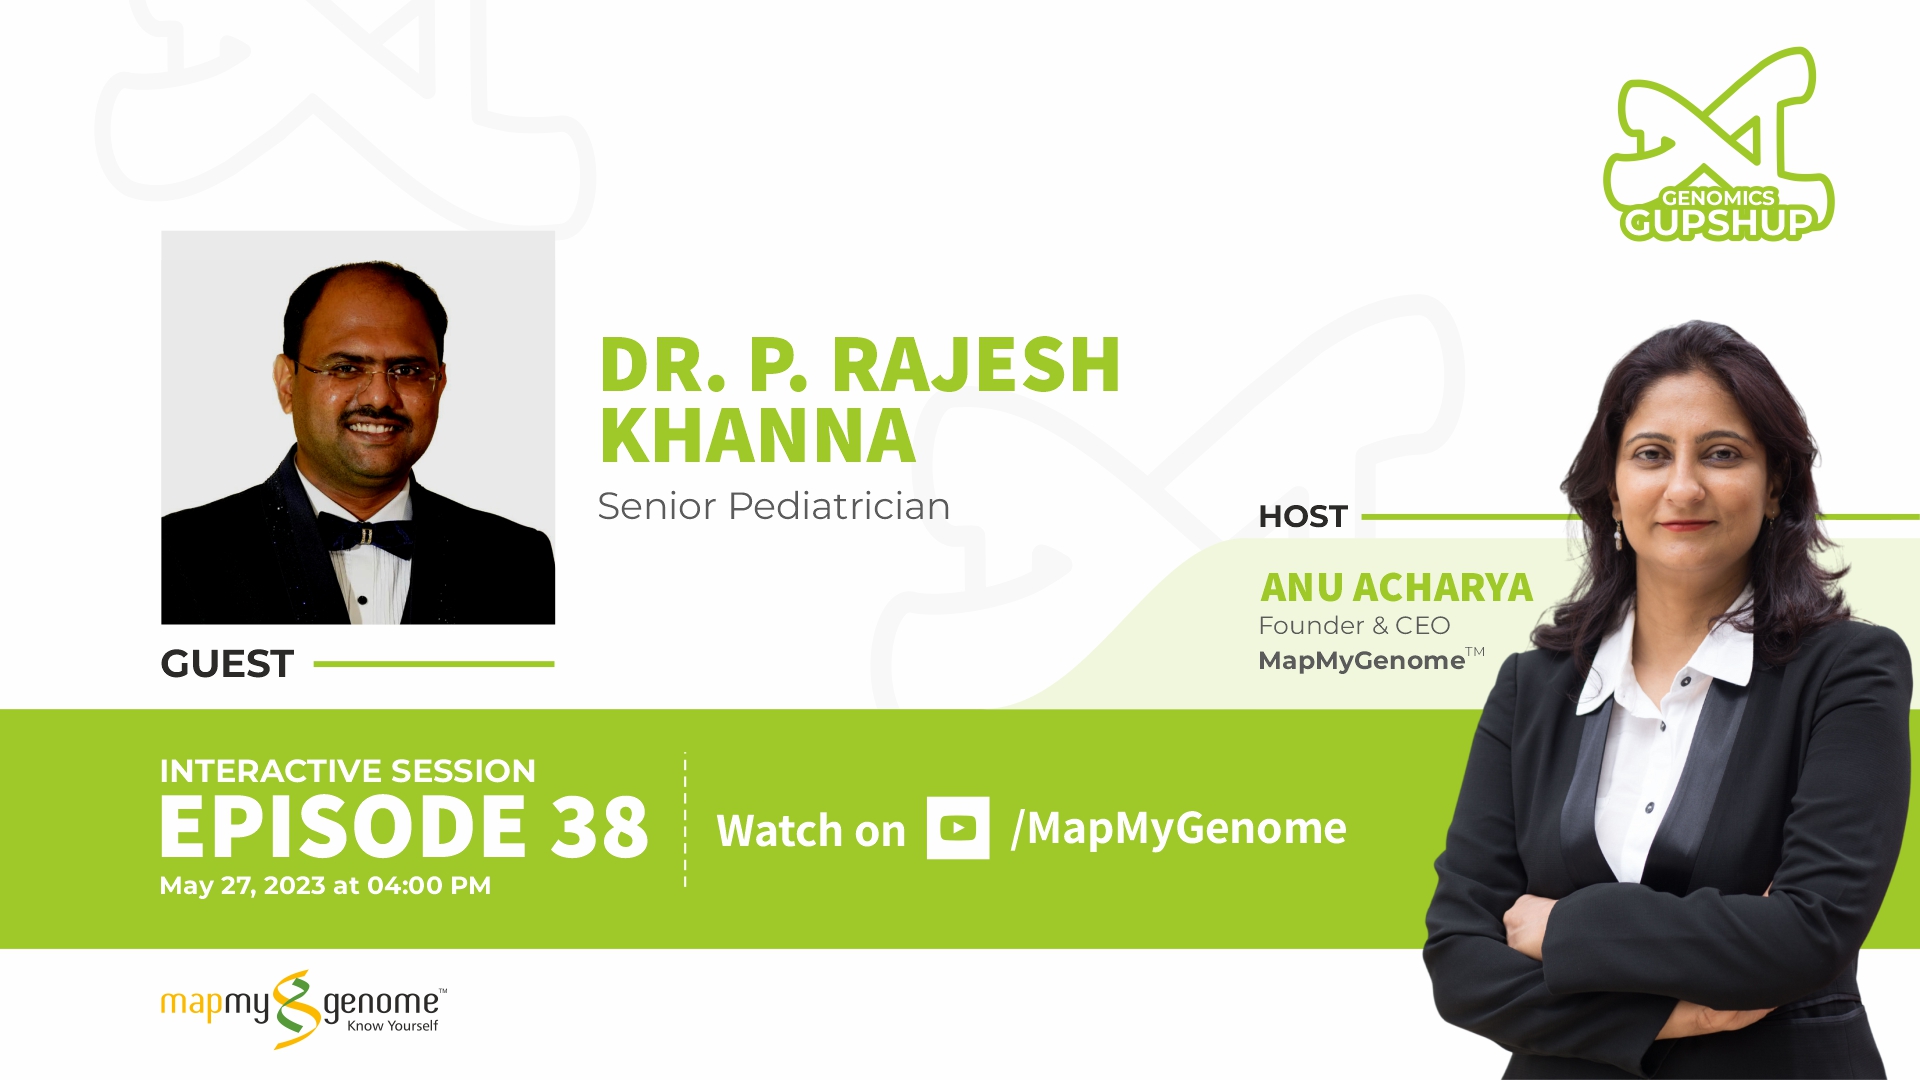 Genomeics Gupshup Dr. Rajesh Khanna, Pediatrician